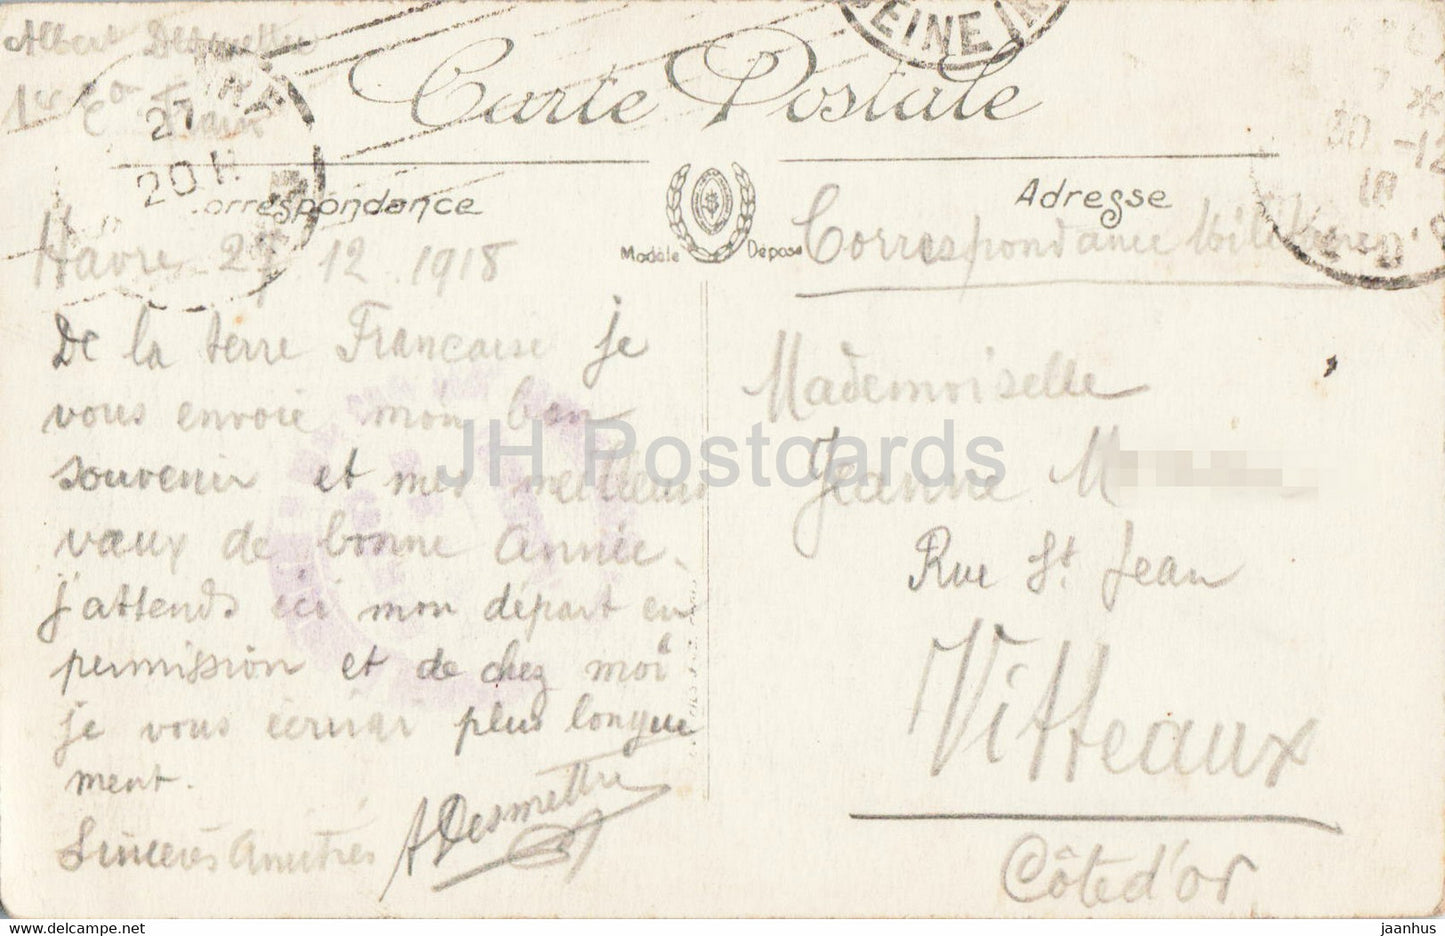 Sainte Adresse - L'Eglise de Ste Adresse - 182 - church - military mail - old postcard - France - used